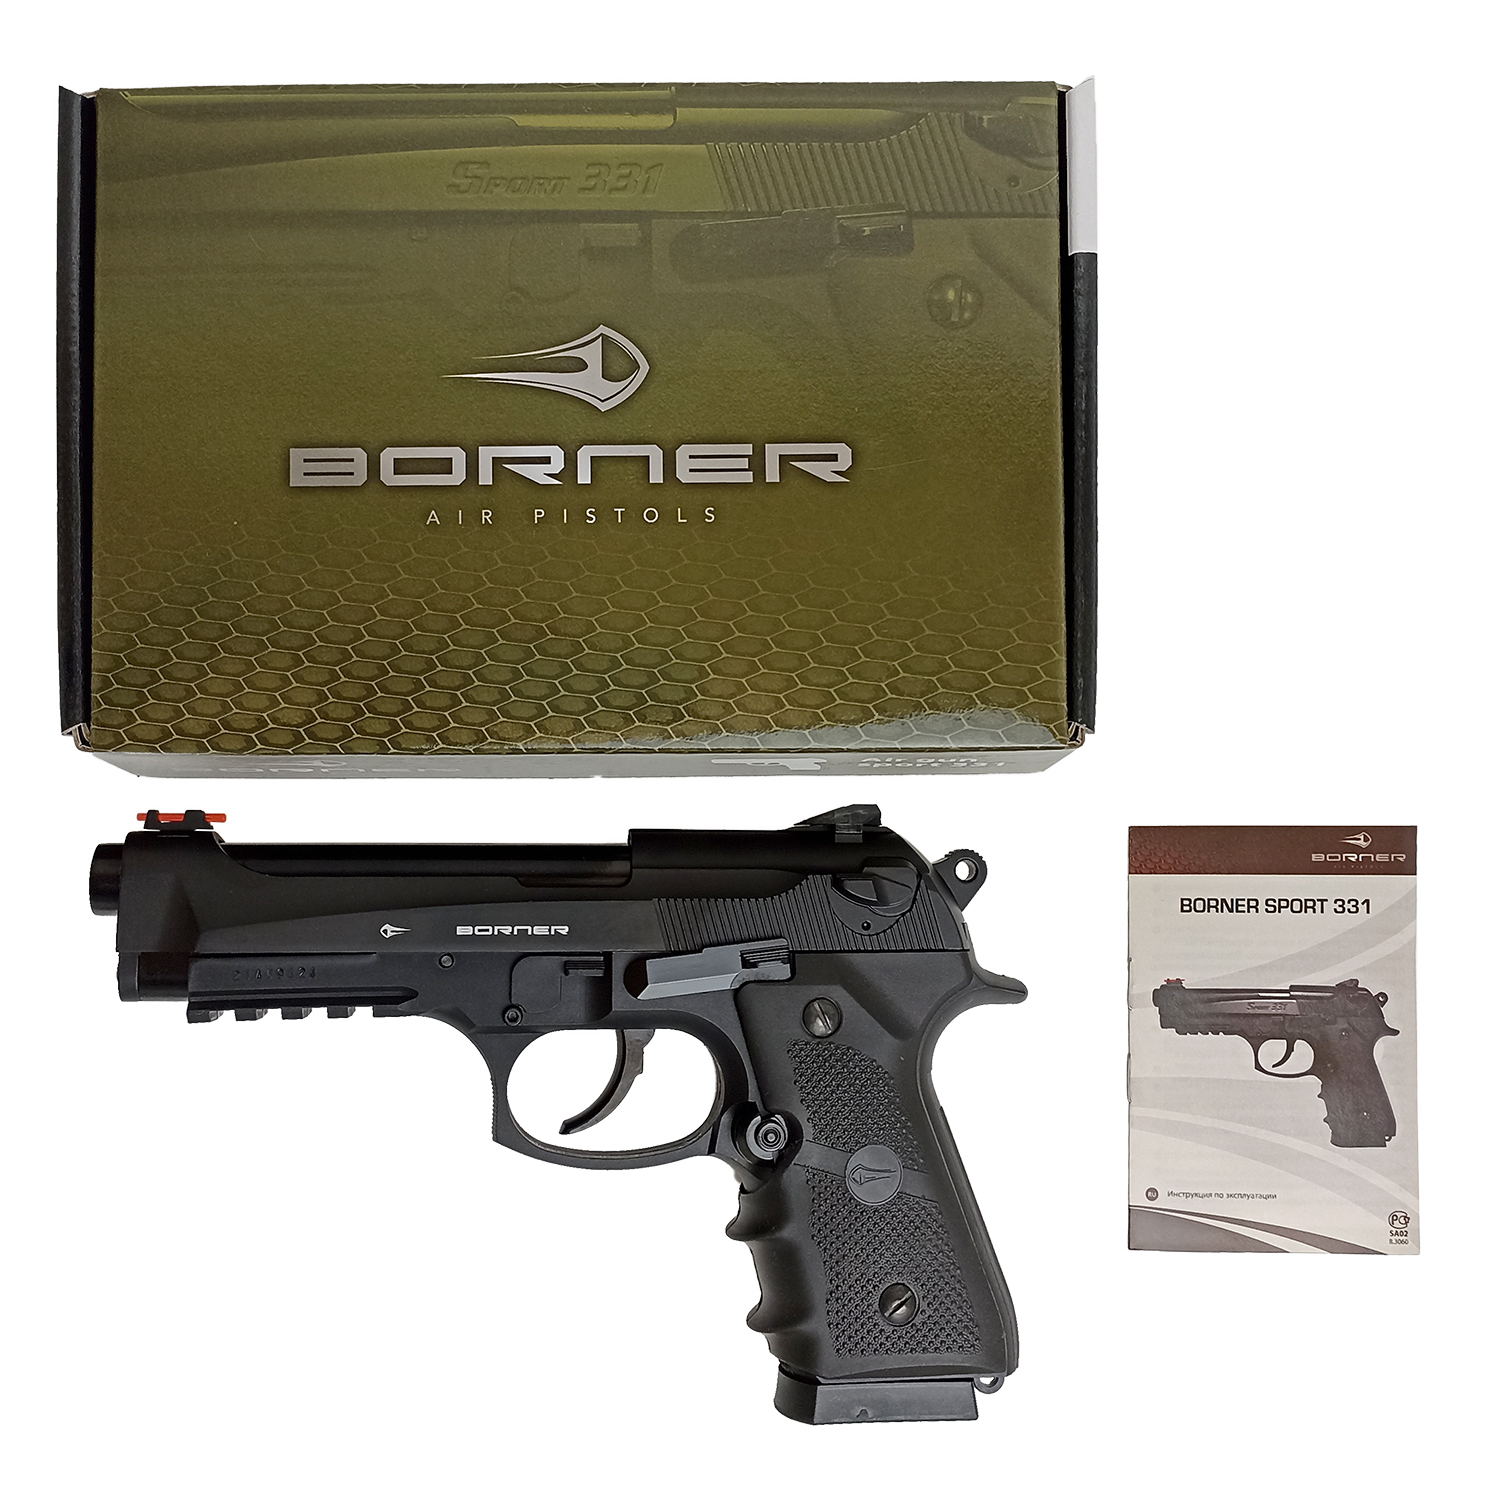 Пневматический пистолет Borner Sport 331 (beretta), калибр 4,5 мм